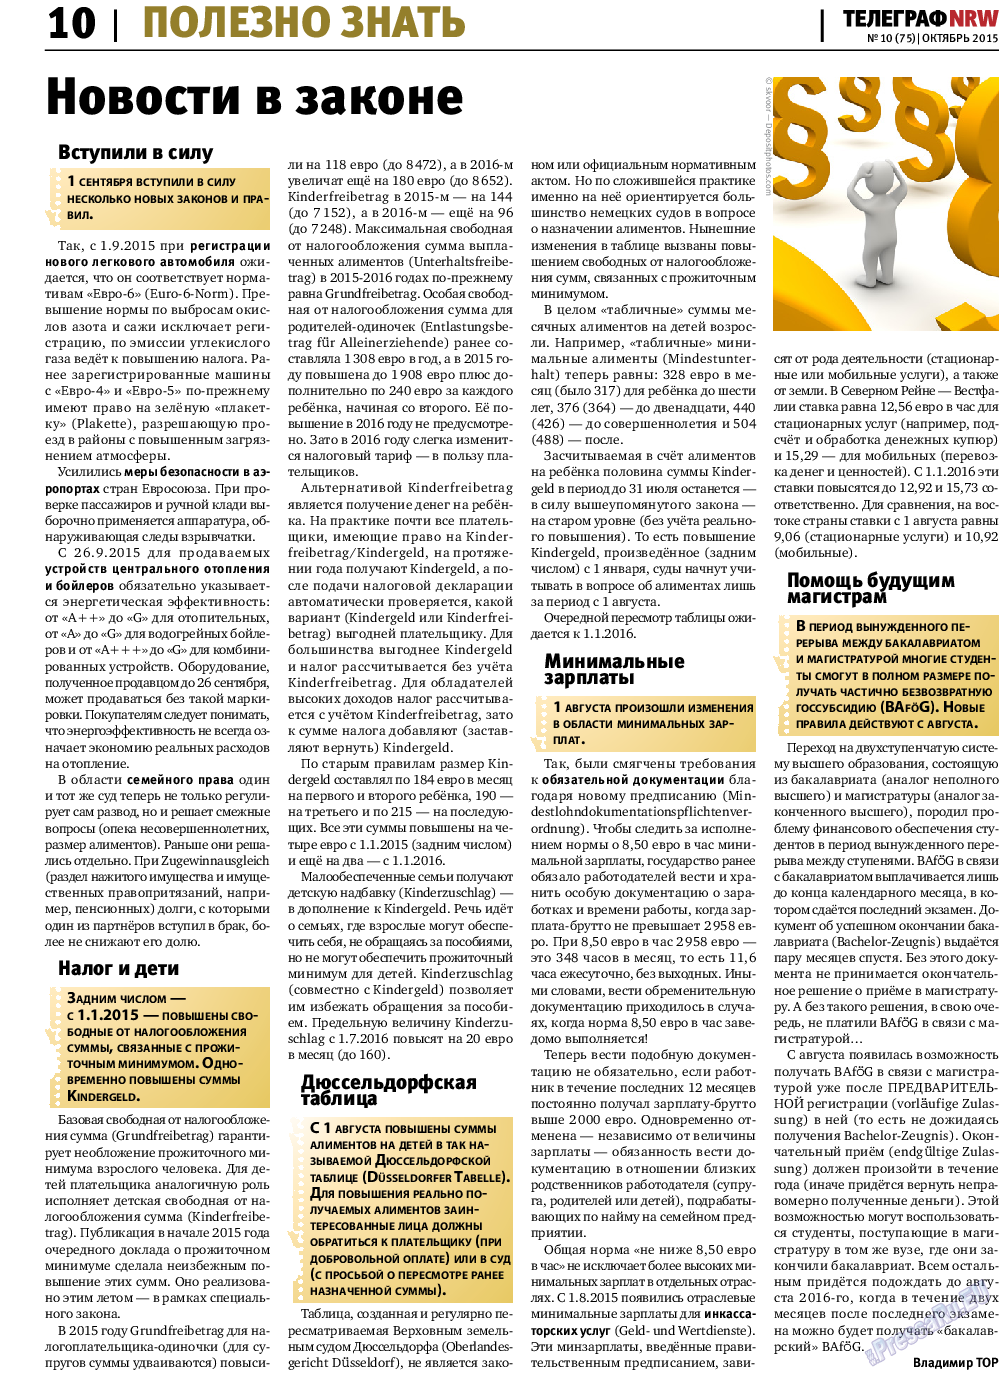 Телеграф NRW, газета. 2015 №10 стр.10